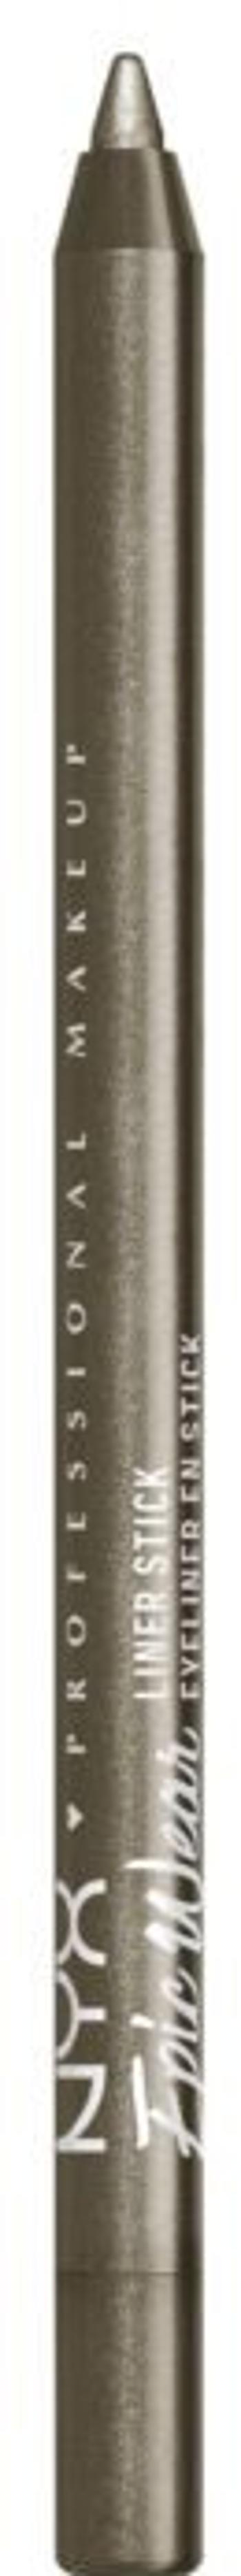 NYX Professional Makeup Epic Wear Liner Sticks voděodolná linka na oči - 03 All Time Olive 1.2 g